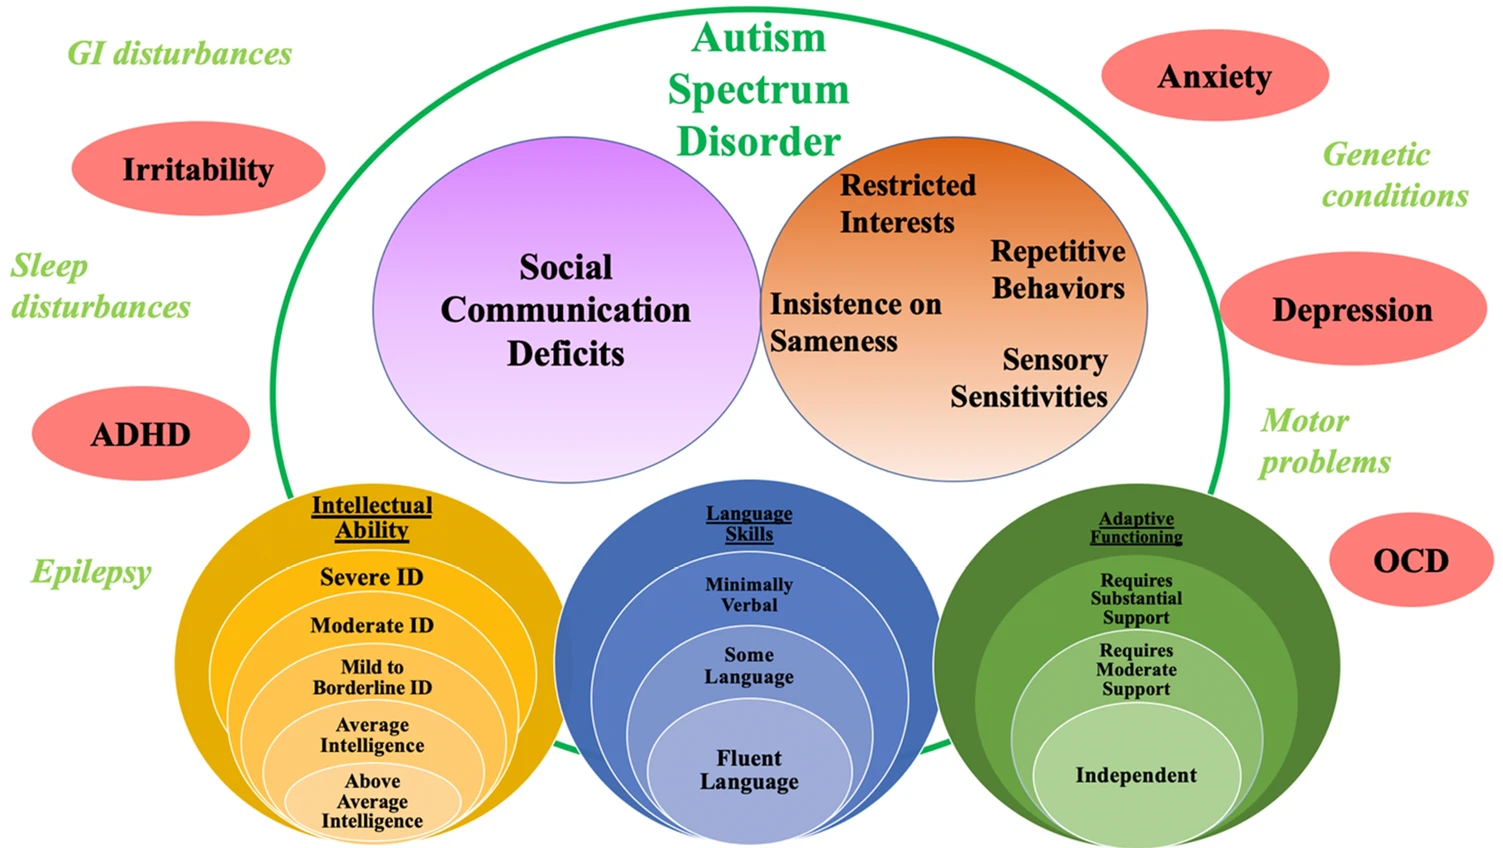 Autism Spectrum Disorder Chart - ADHD, Irritability, Anxiety, Depression, OCD